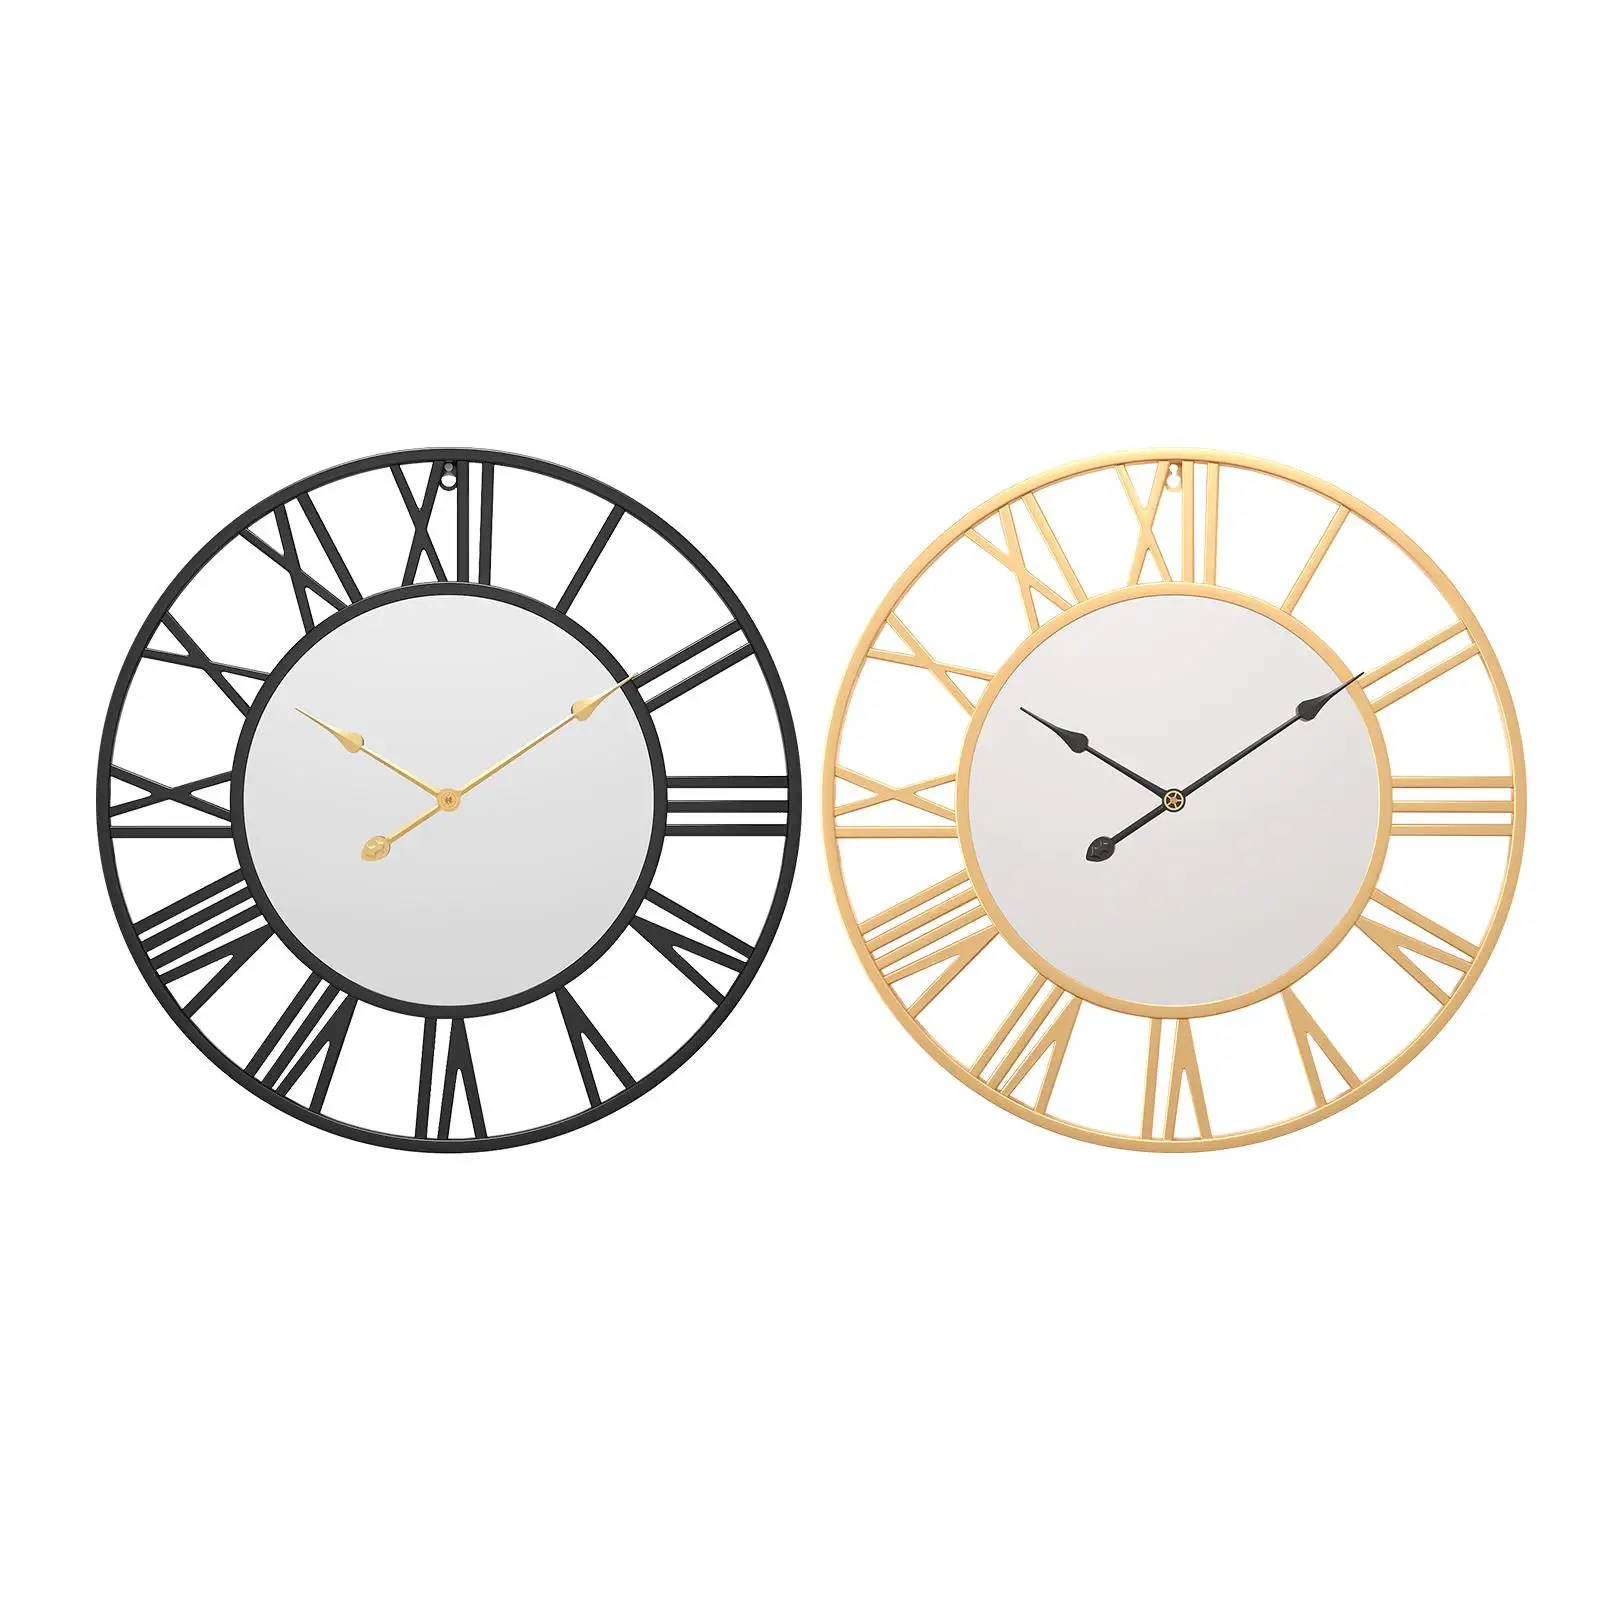 Round Hanging Clock Decorative Roman Numerals for Hotels Schools Seniors Adults Kids